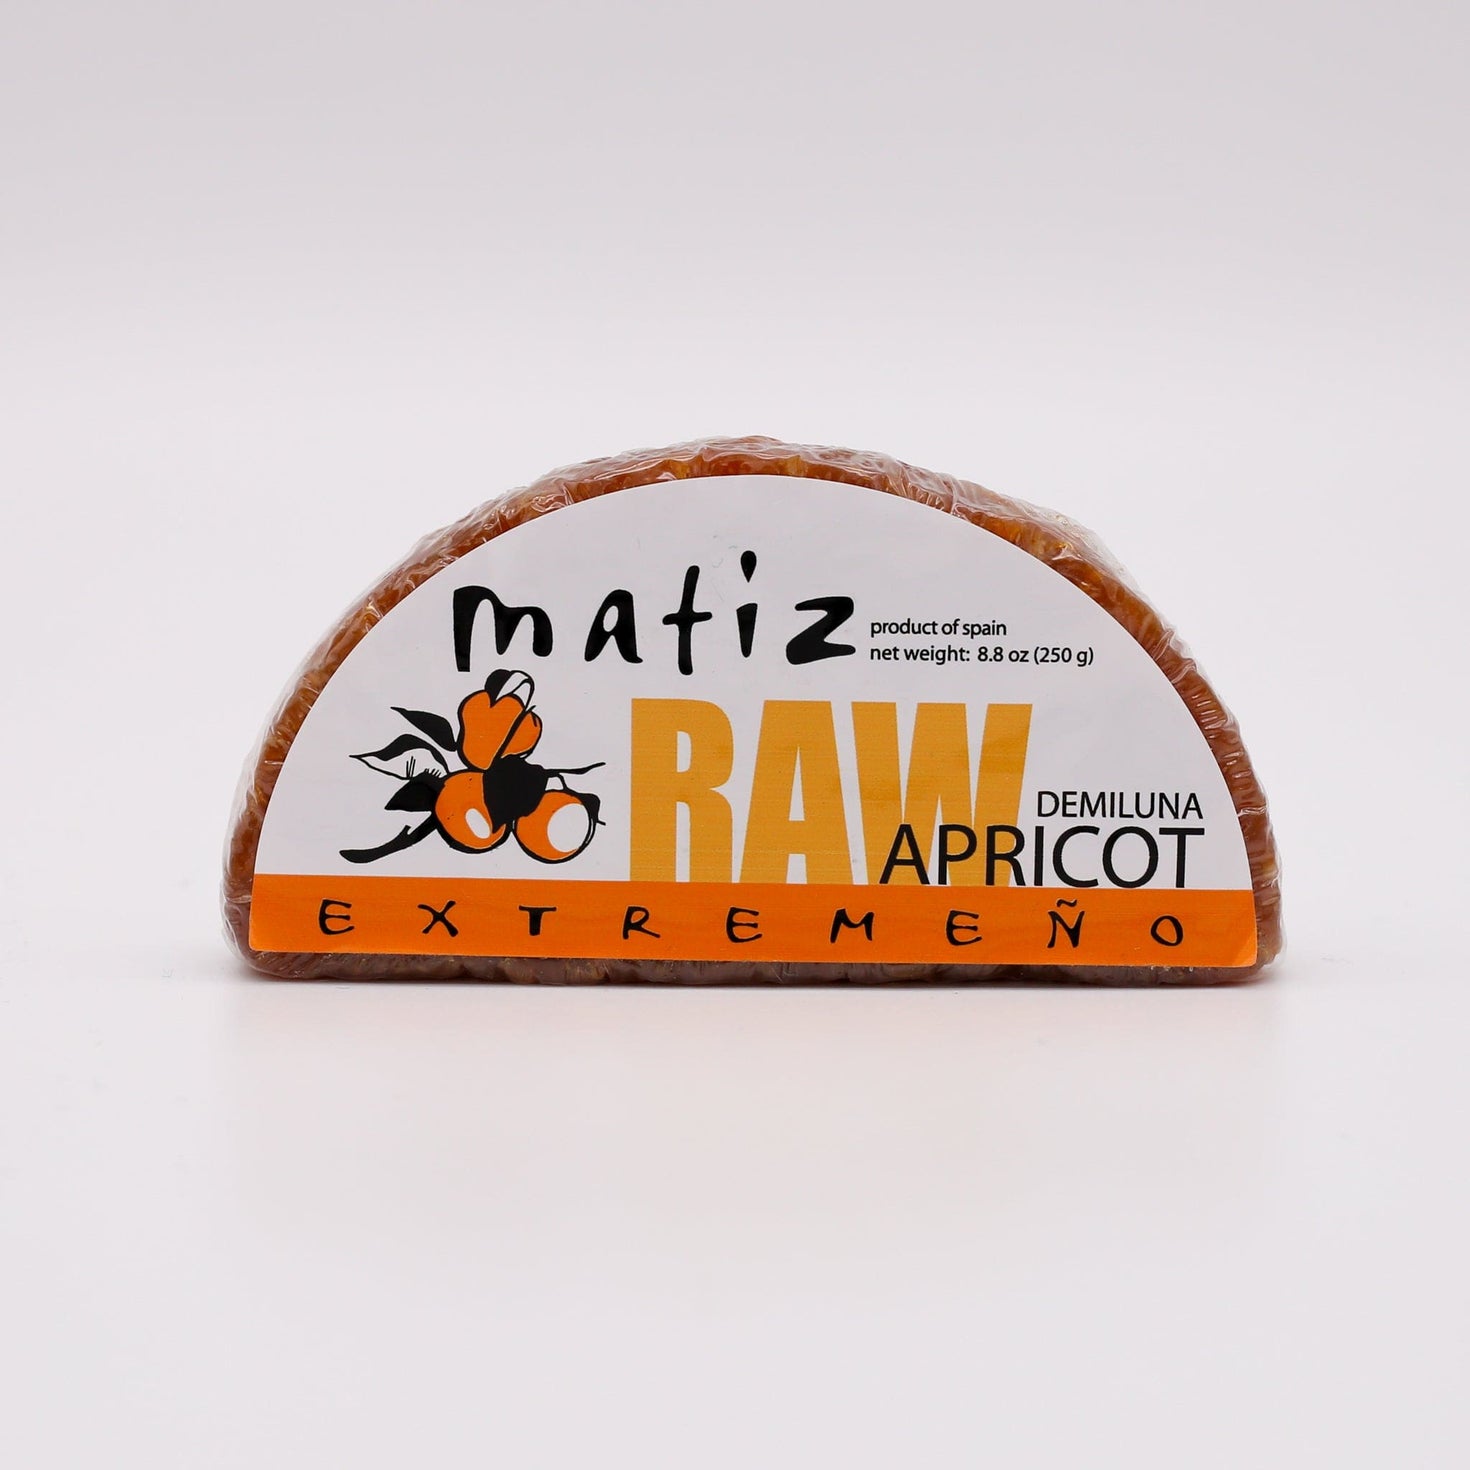 Matiz Raw Apricot 8.8oz